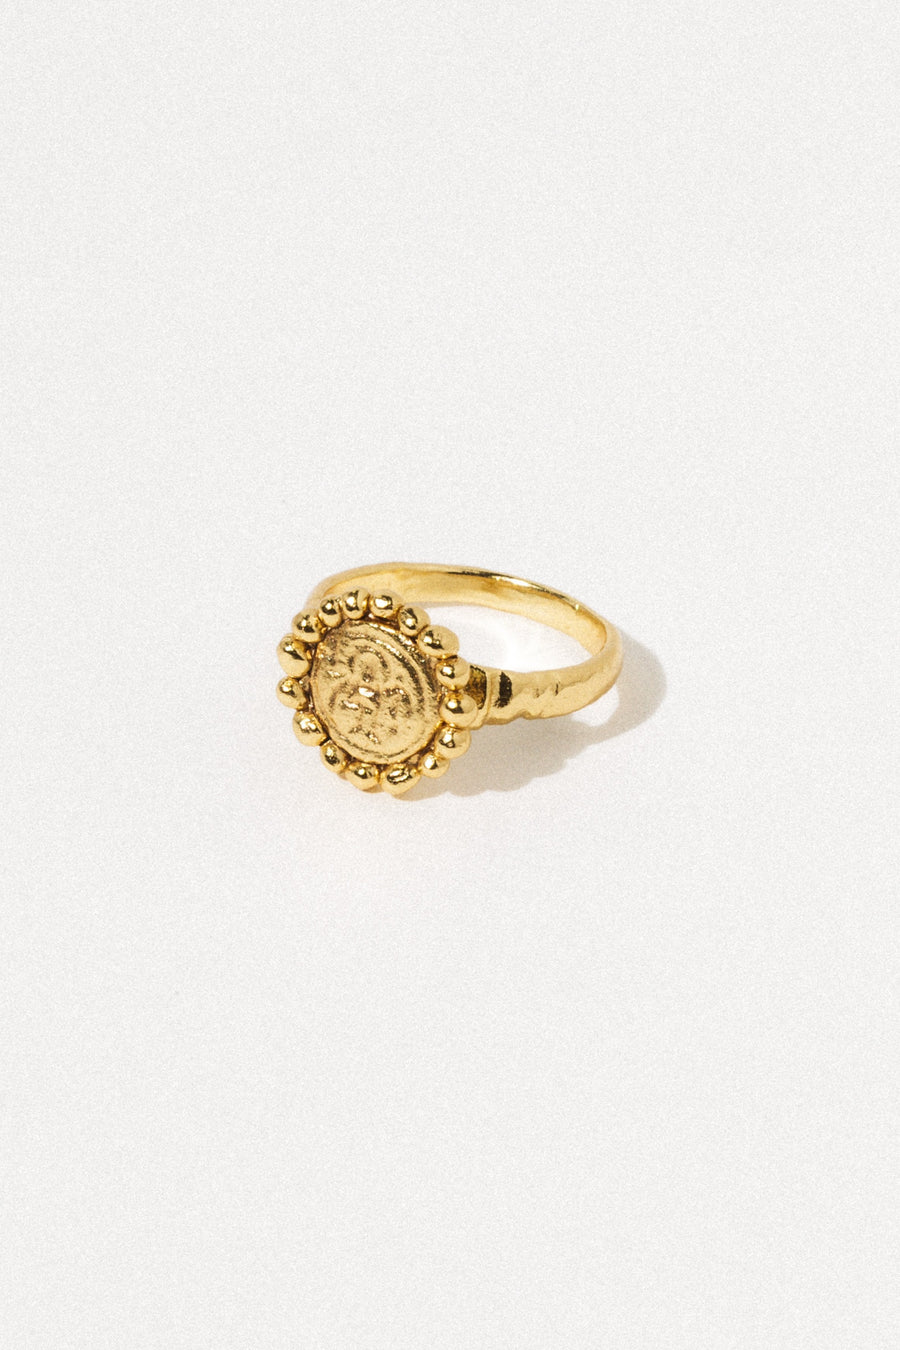 Cleopatra's Bling Jewelry Gold / US 6 Esperanza Ring